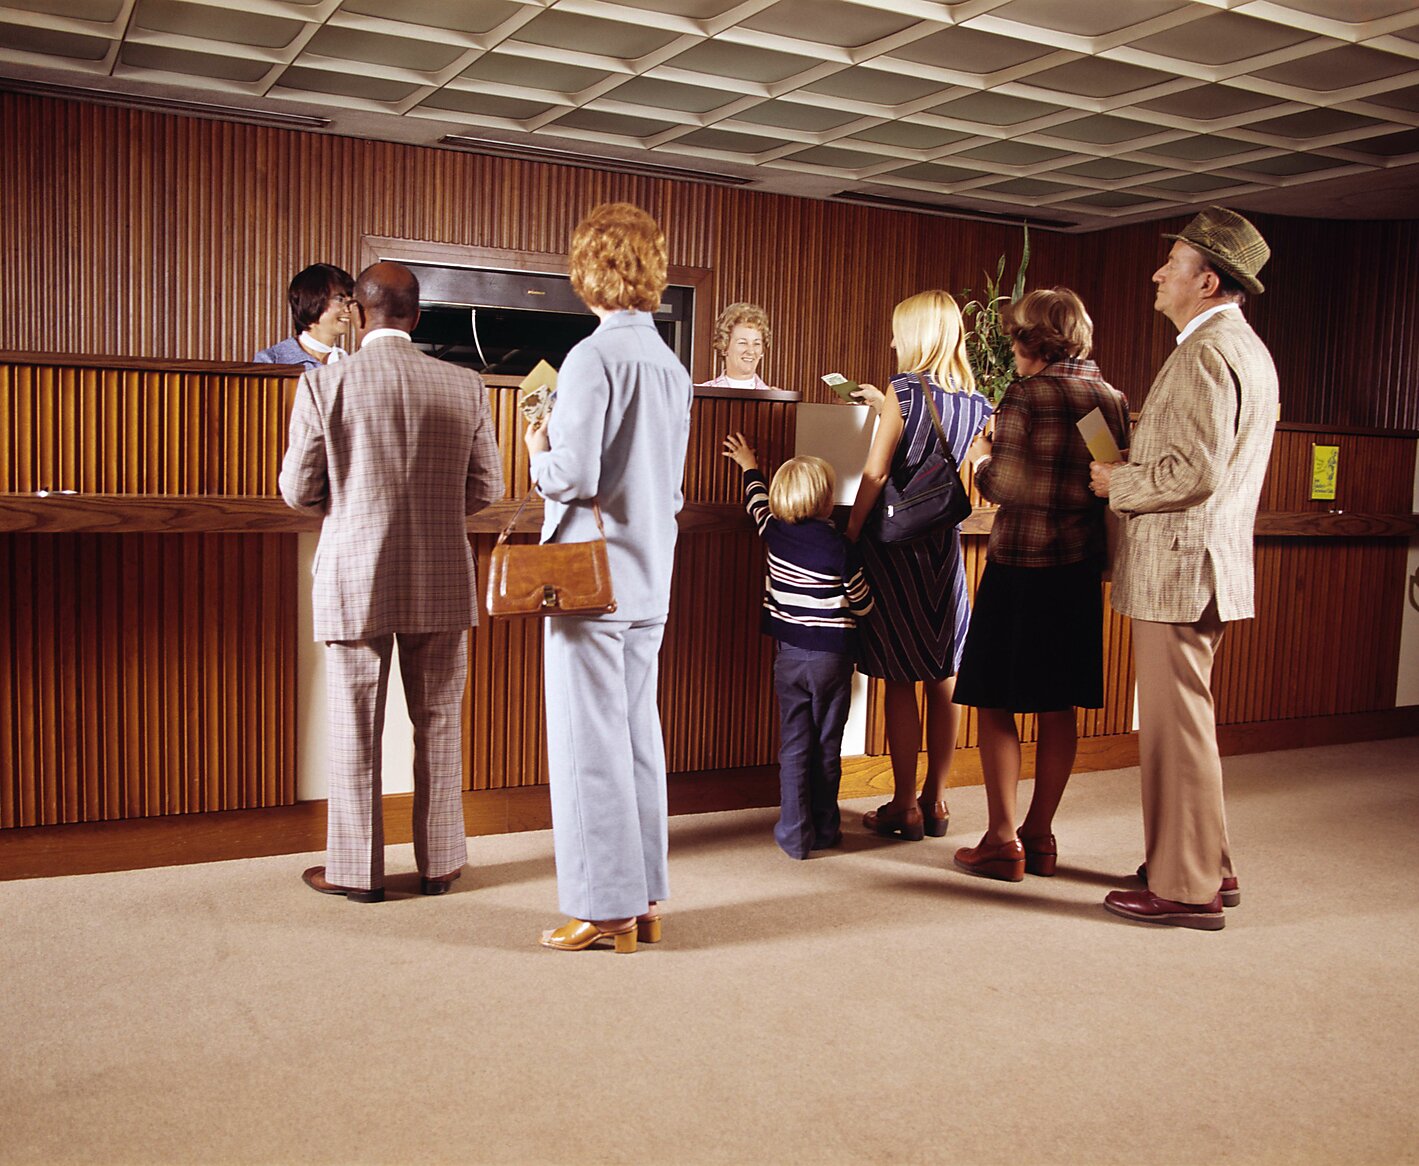 1970s bank customers wait in line